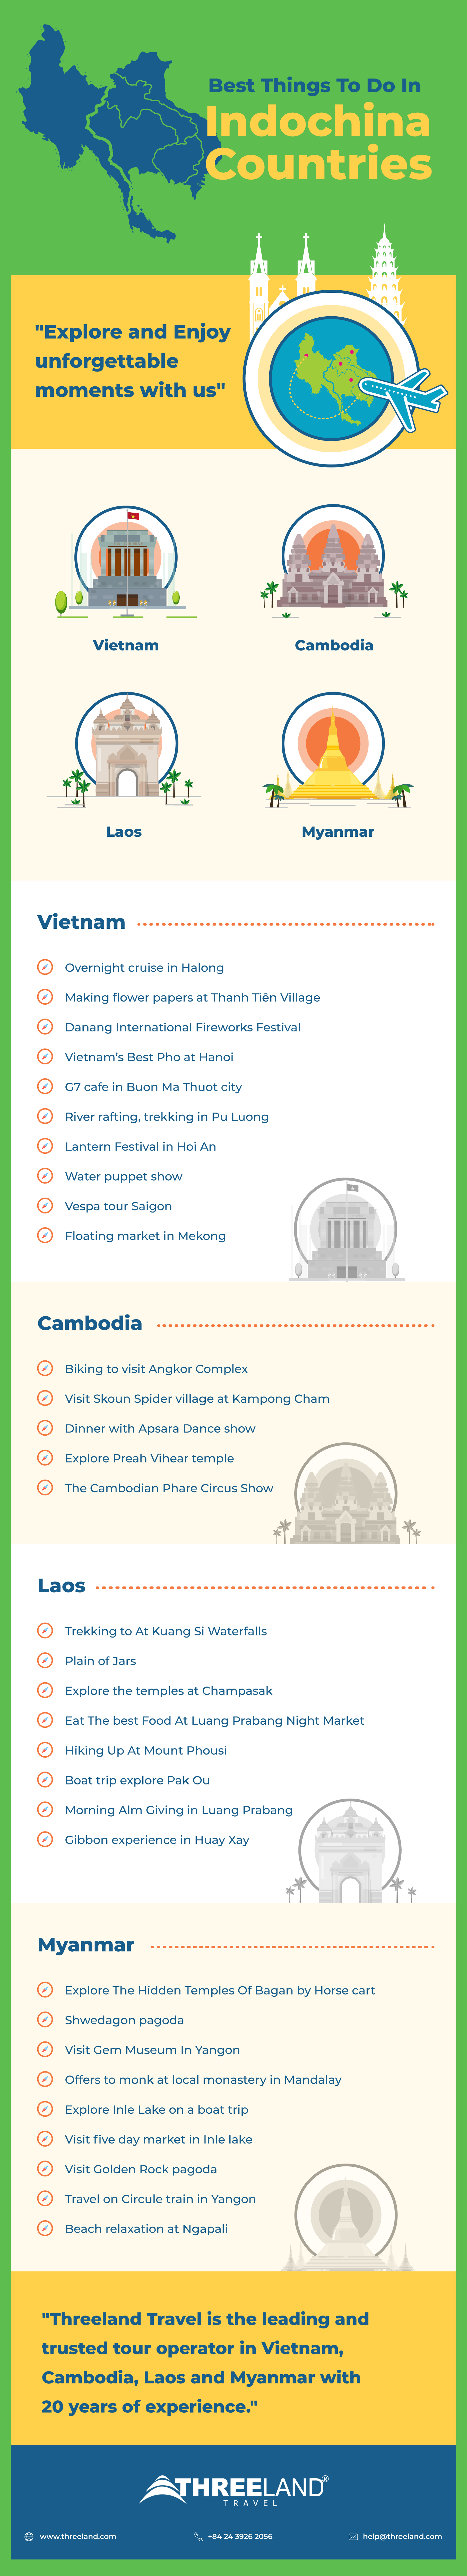 things-to-do-in-vietnam-myanmar-laos-cambodia-infographic